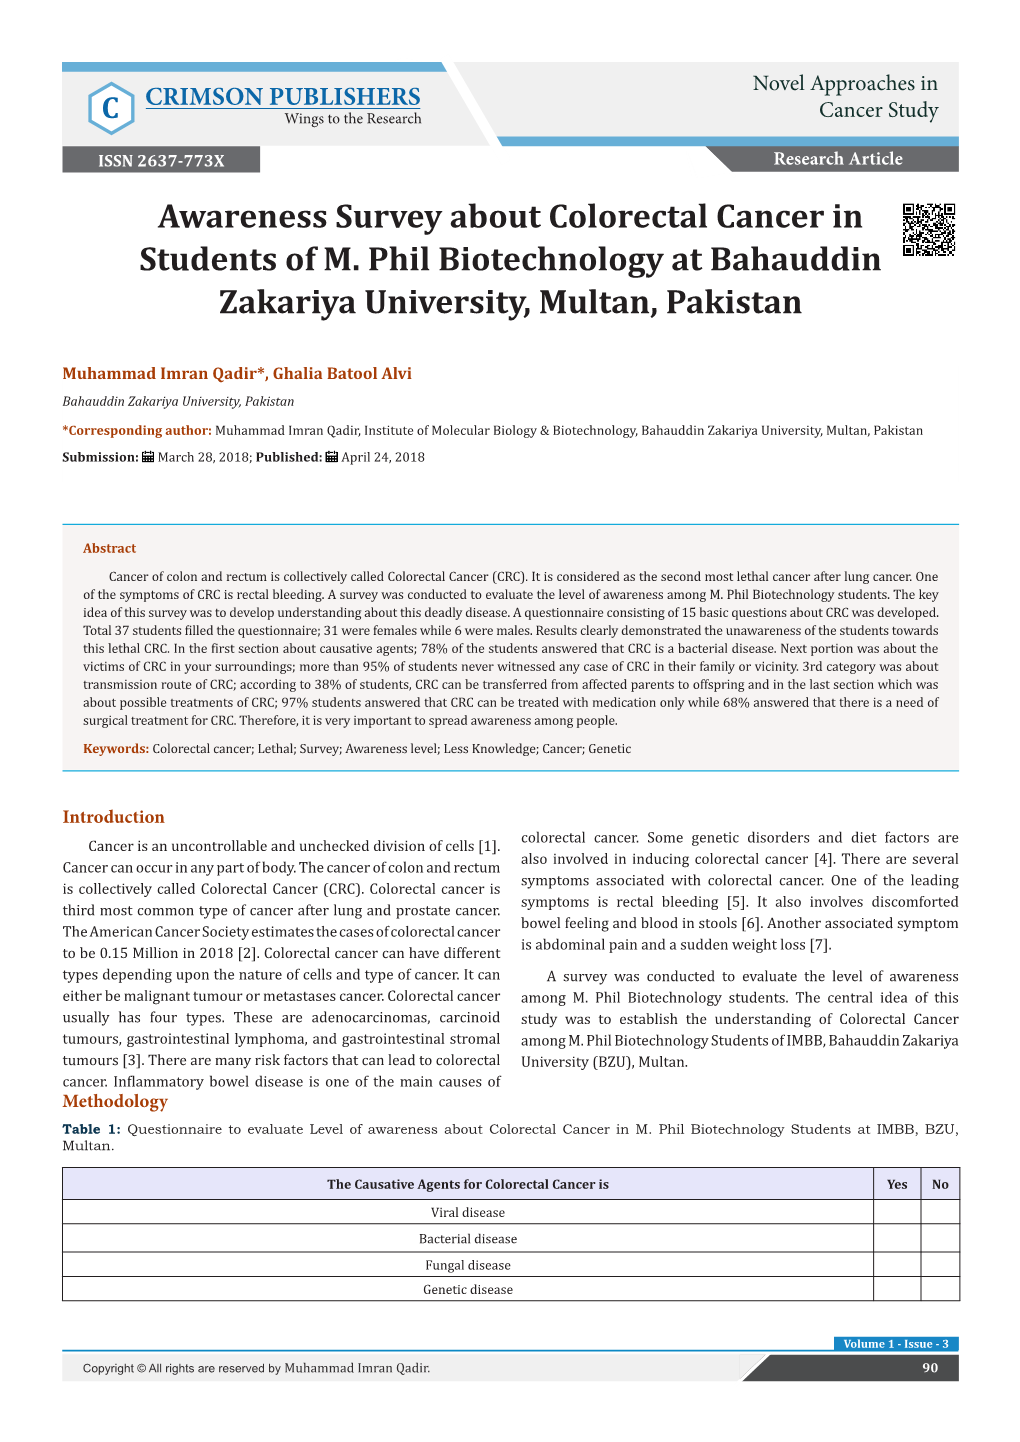 Awareness Survey About Colorectal Cancer in Students of M. Phil Biotechnology at Bahauddin Zakariya University, Multan, Pakistan